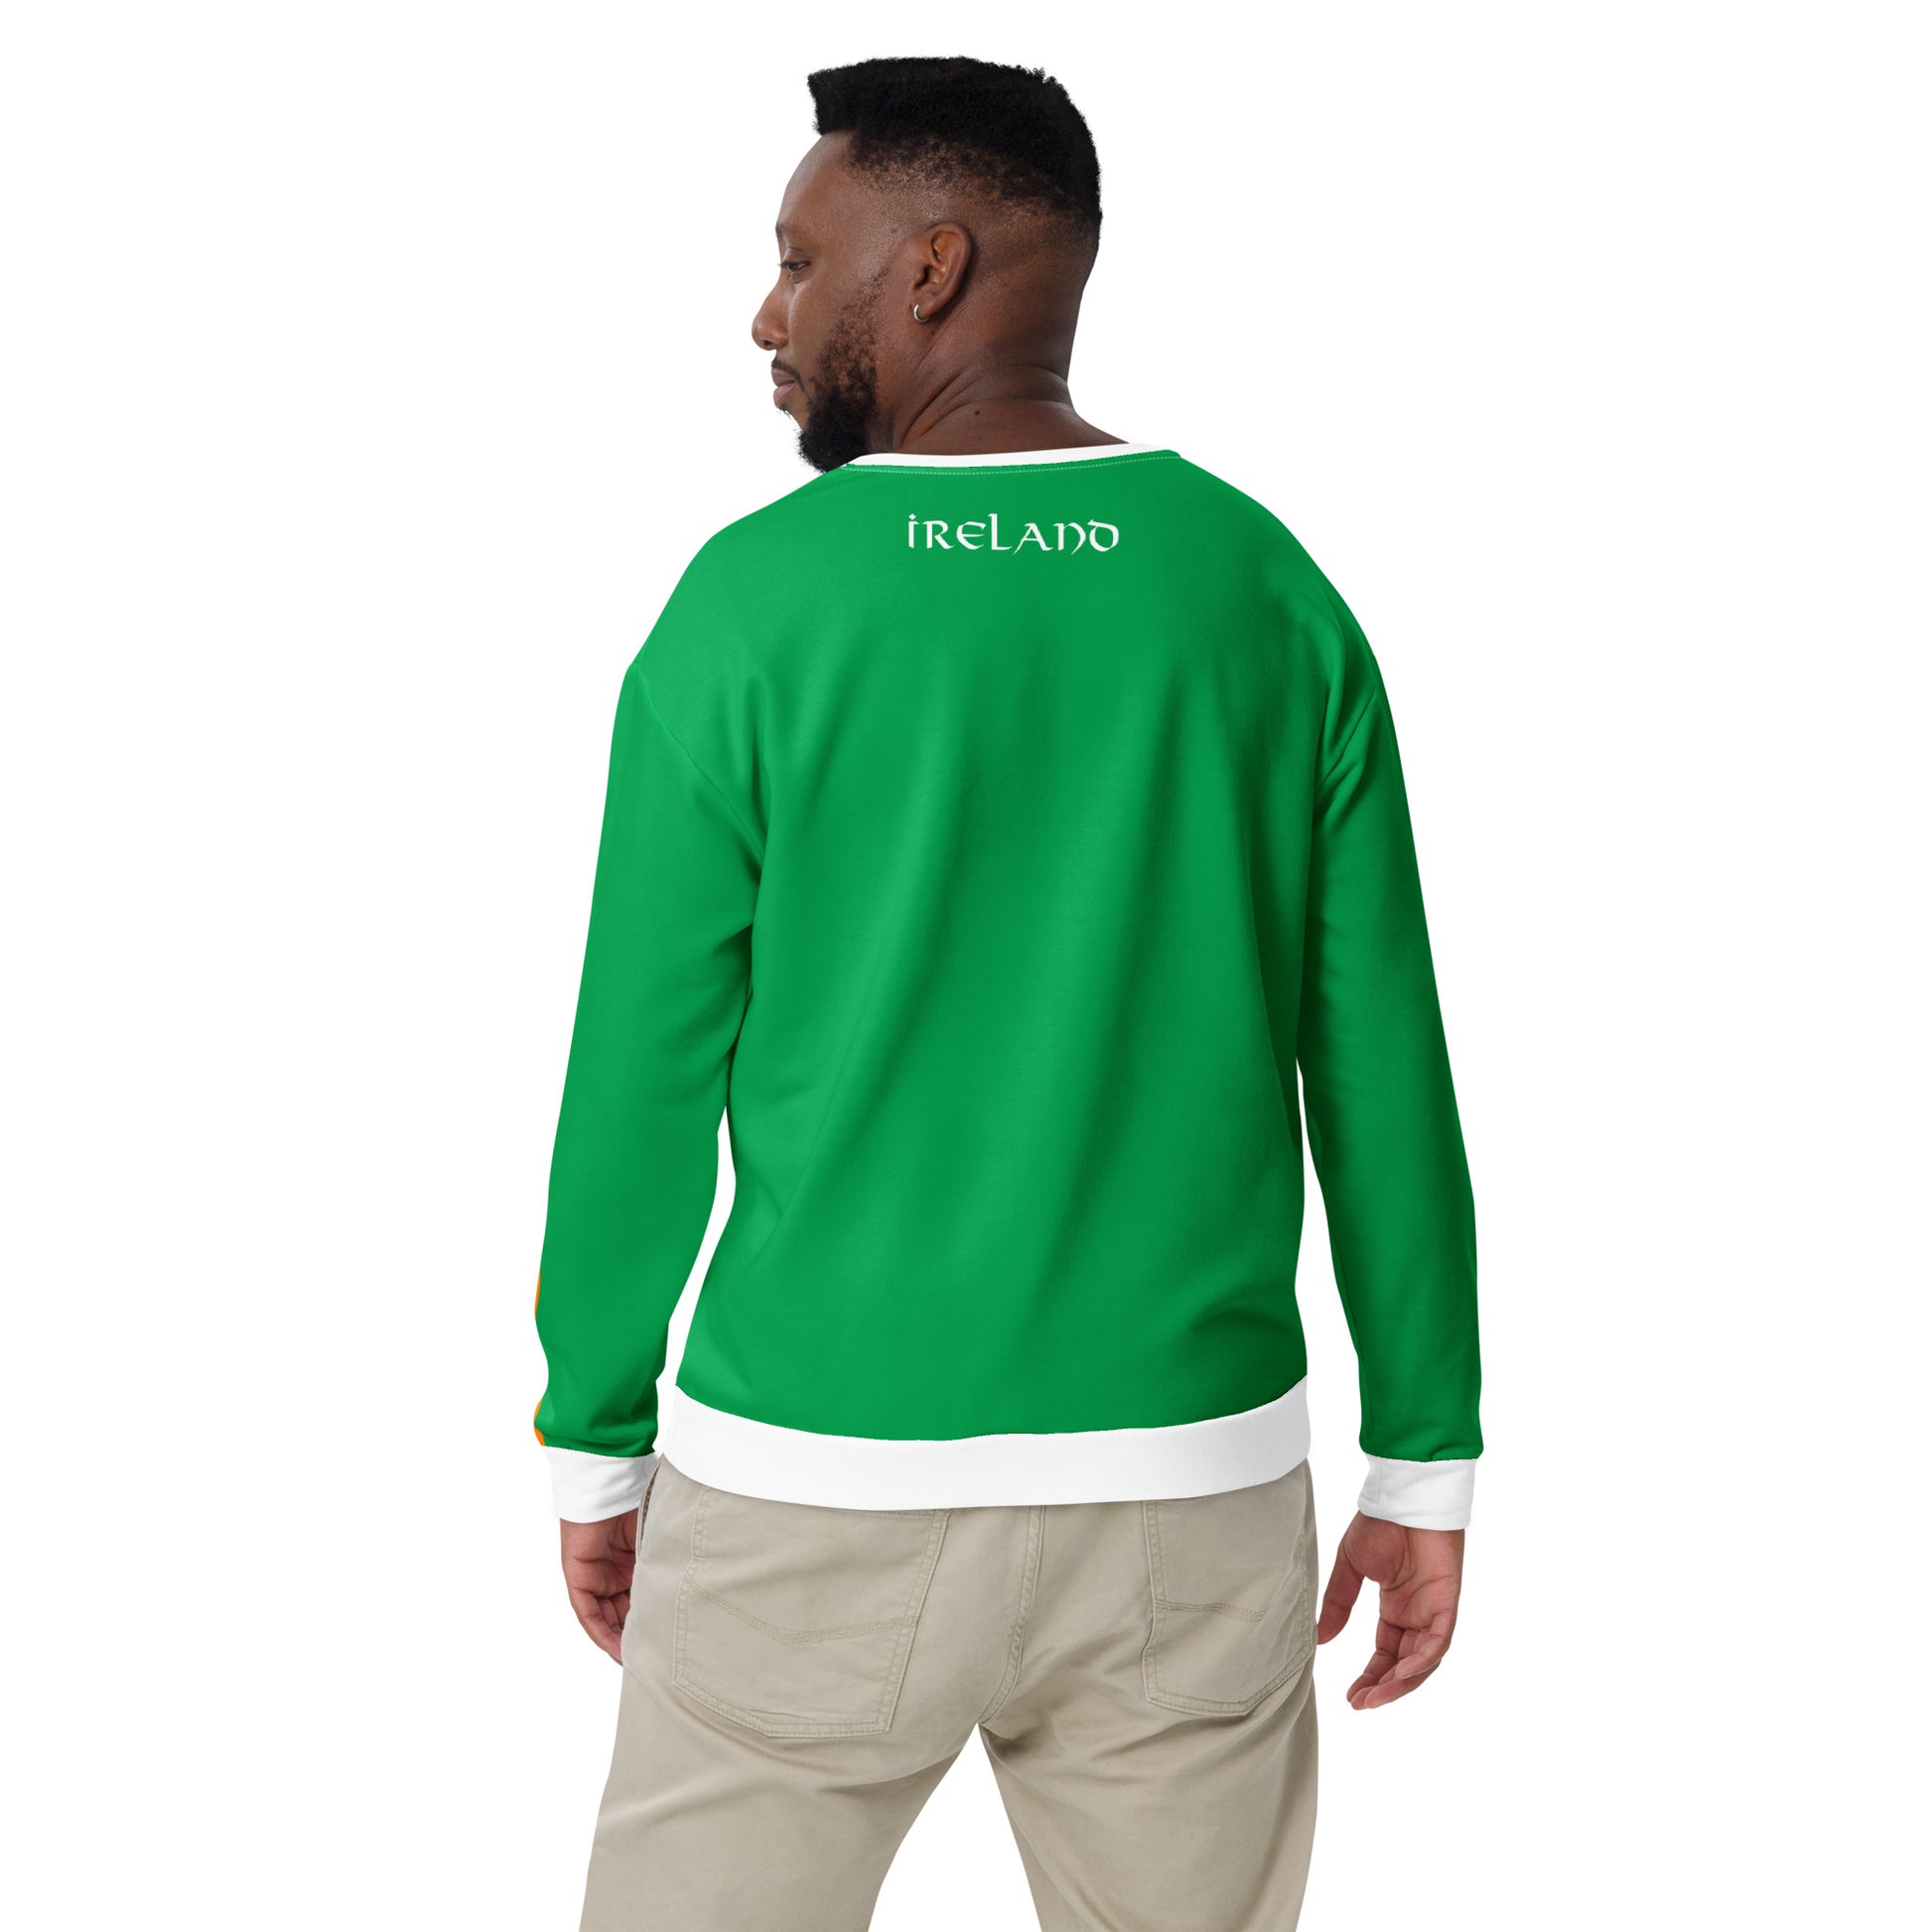 Ireland flag sweater